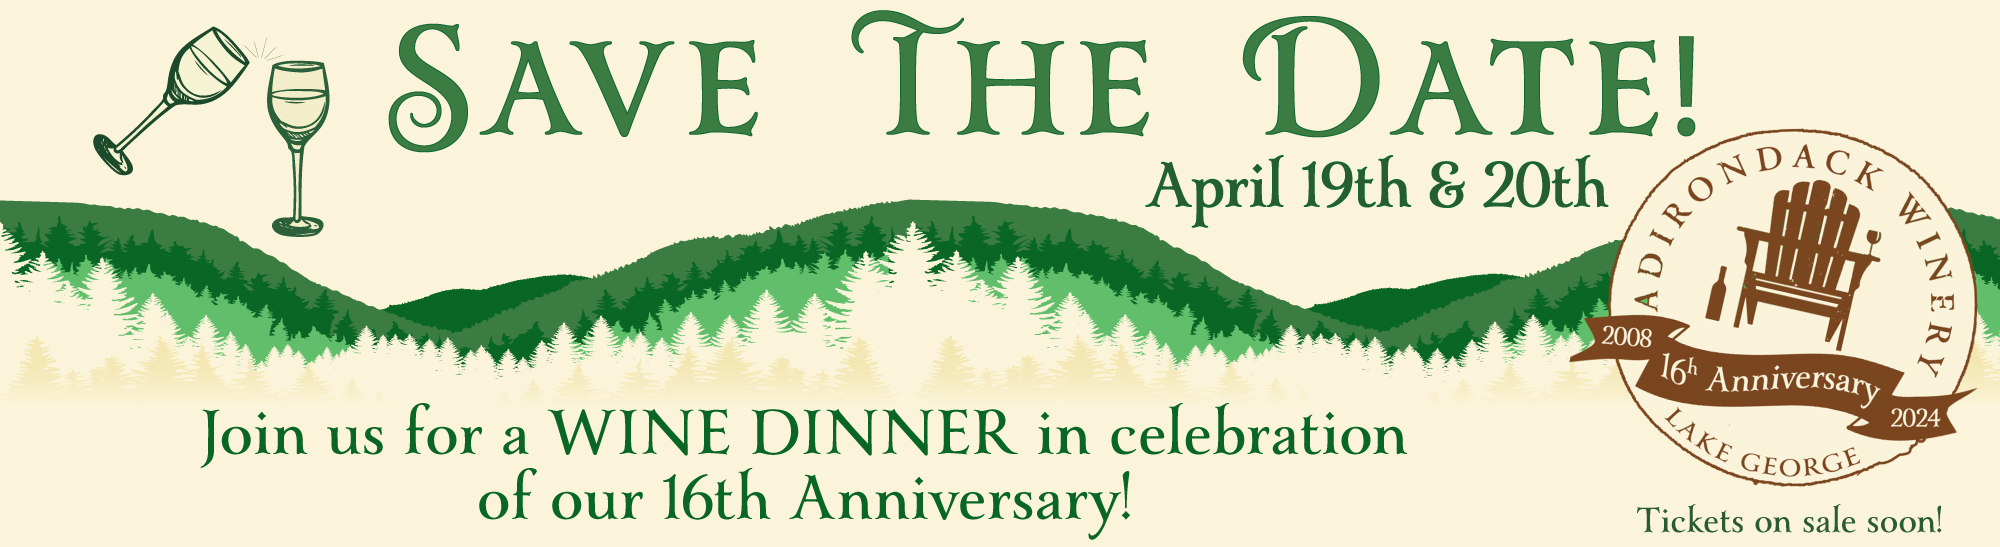 Adirondack Winery 16th Anniversary Events